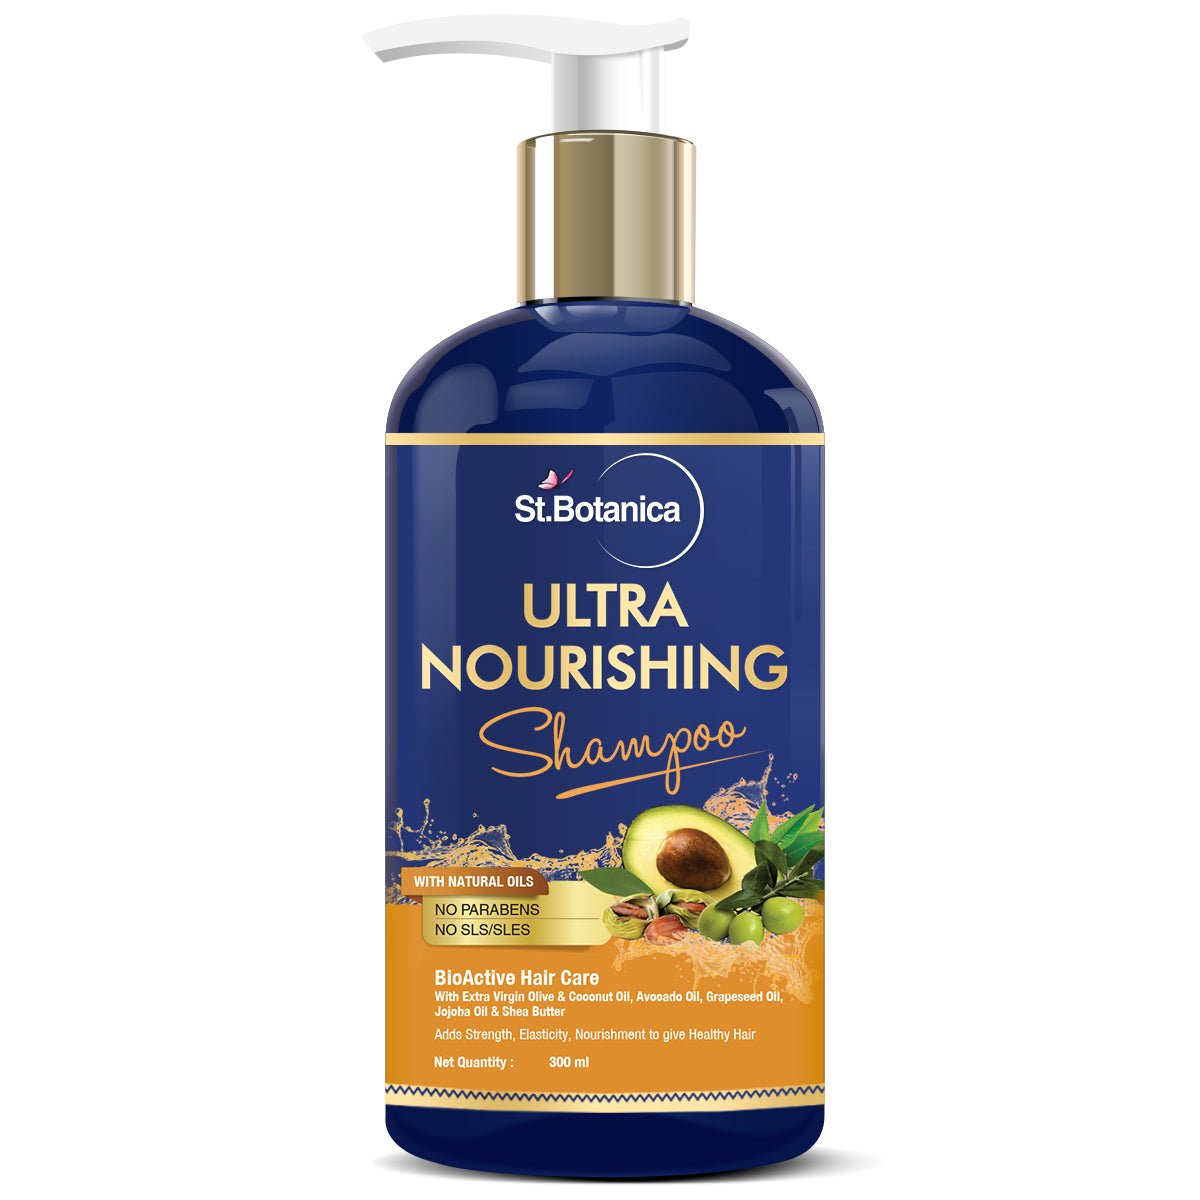 St.Botanica Ultra Nourishing Hair Shampoo - 300ml For Dry, Normal Hair - No SLS/Sulphate, No Parabens, No Silicon